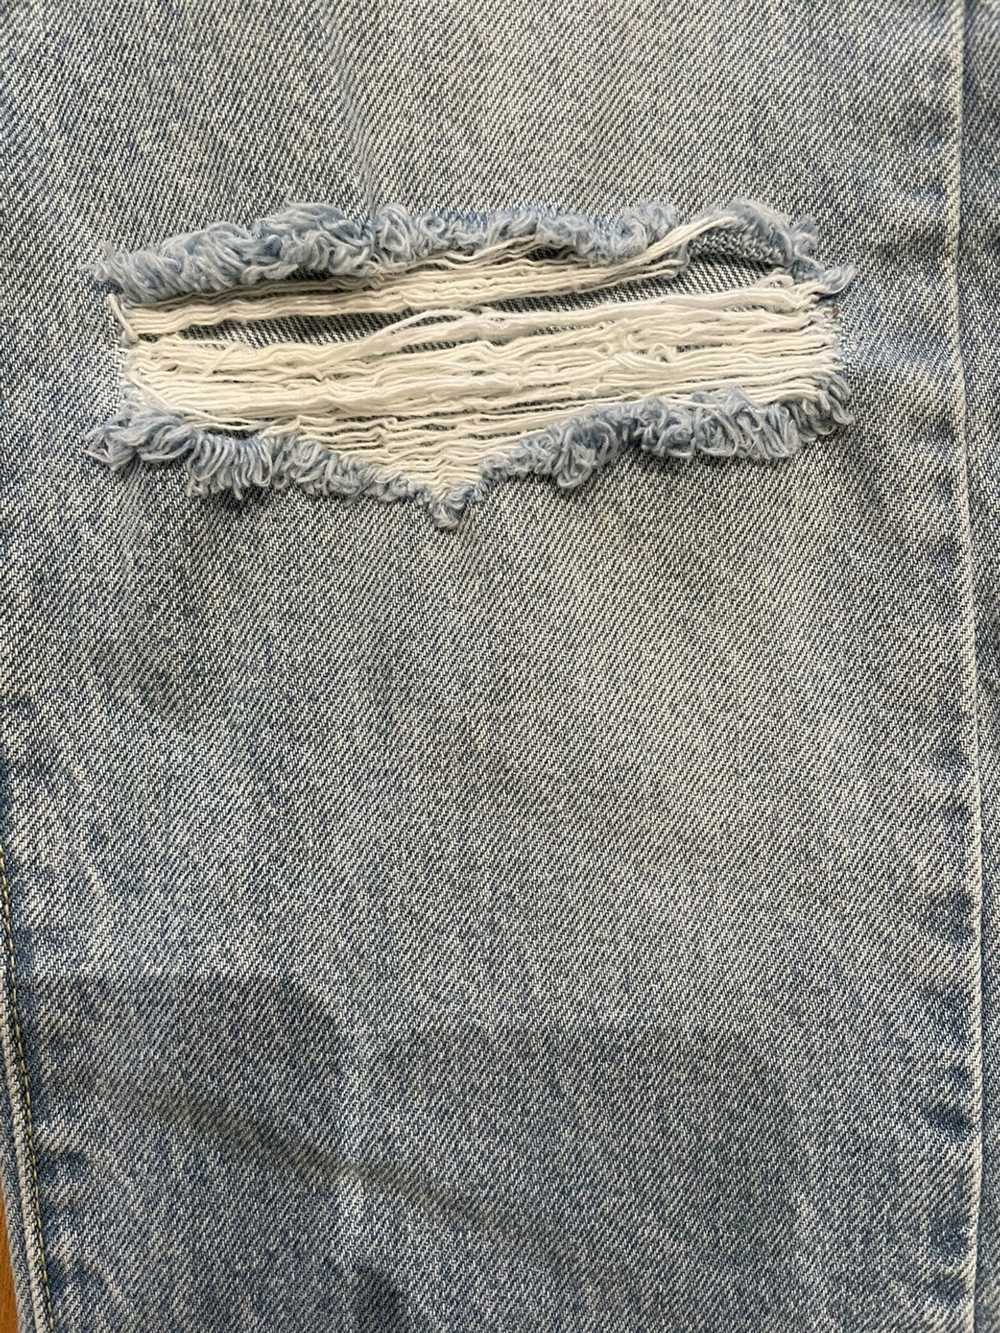 Vintage Vintage Reconstructed Flare Jeans - image 4